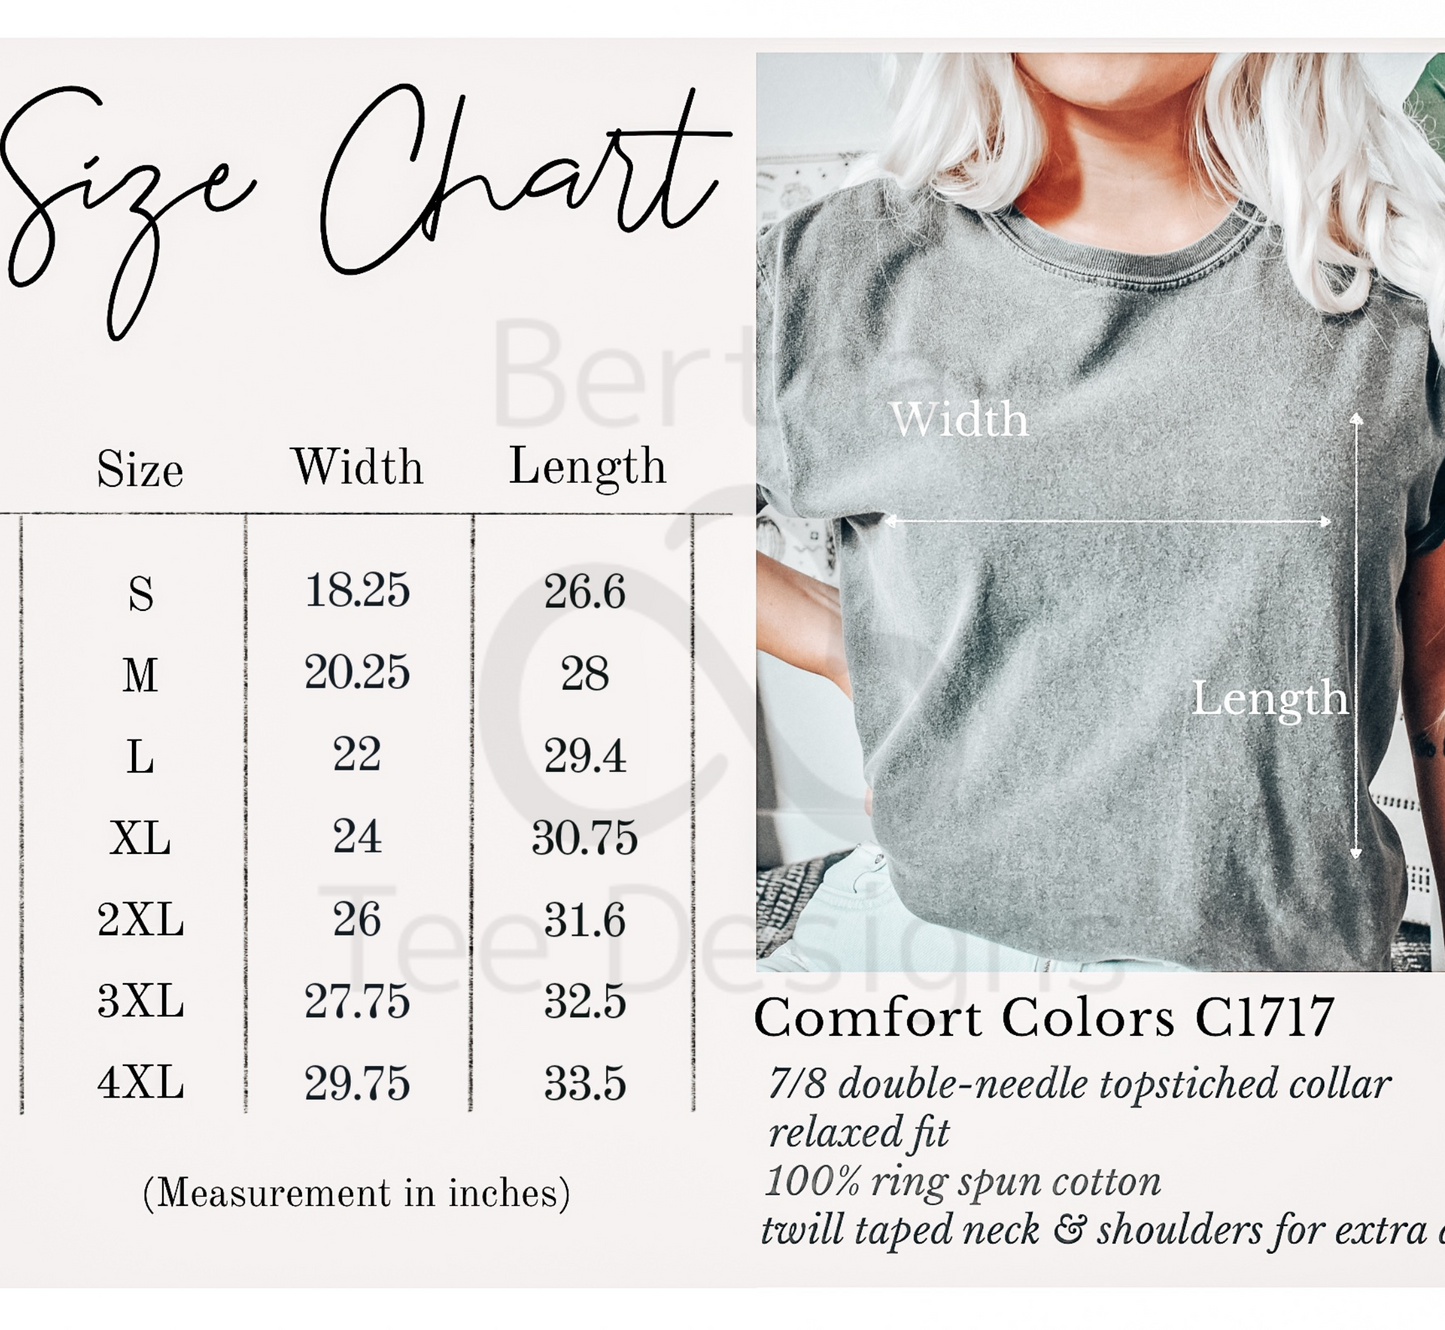 Colorado, Breckenridge Shirt, Comfort Colors® Unisex